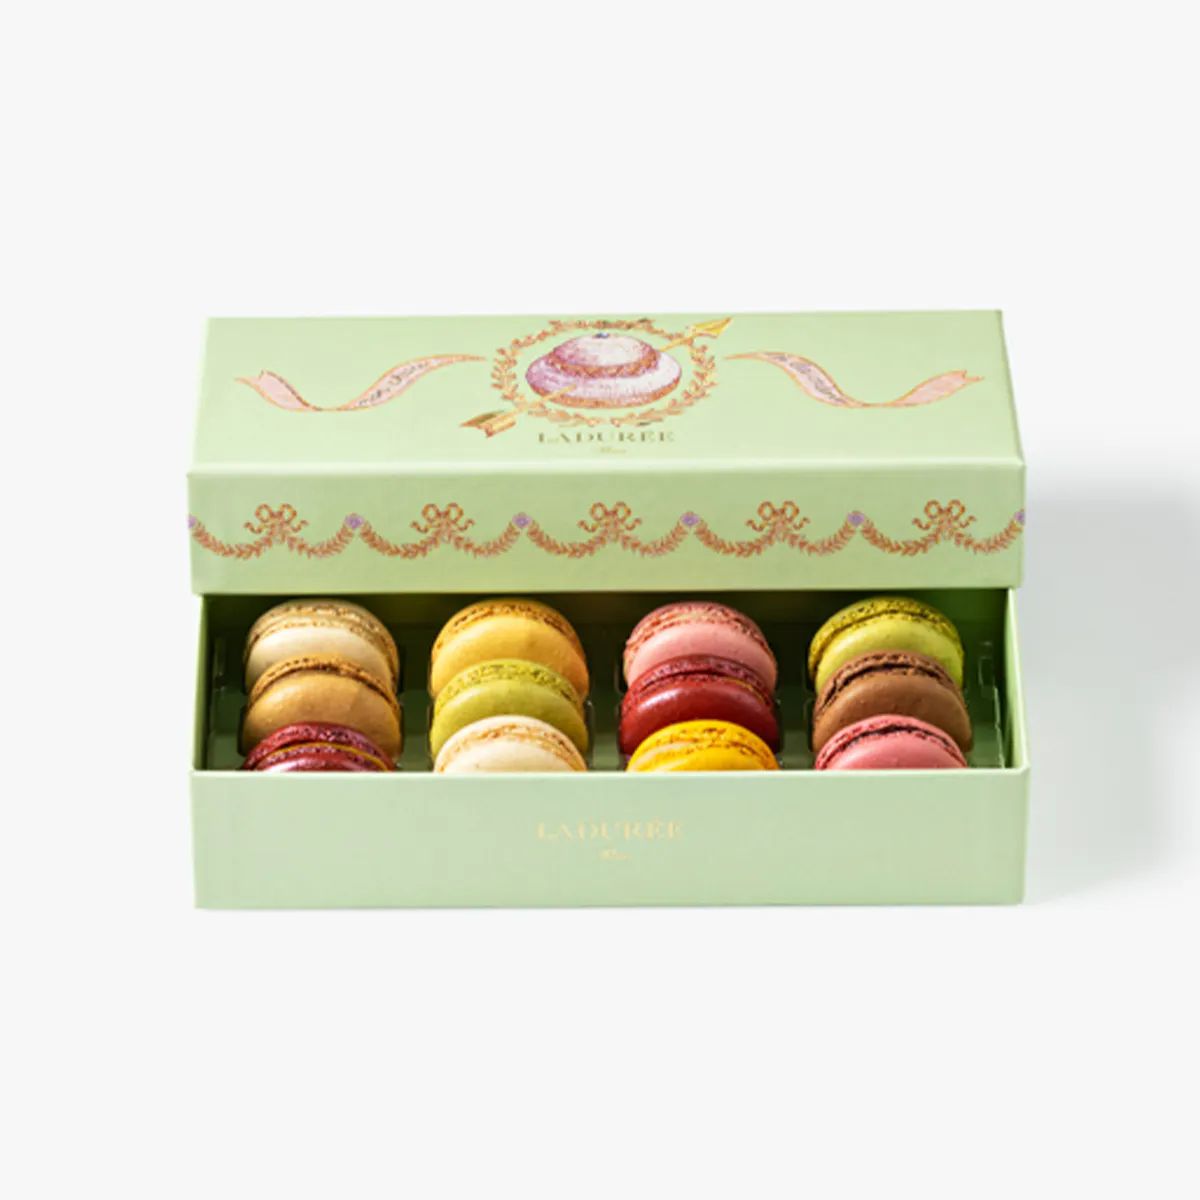 Mon Chou - Box of 12 Macarons by Ladurée Paris | Goldbelly | Goldbelly